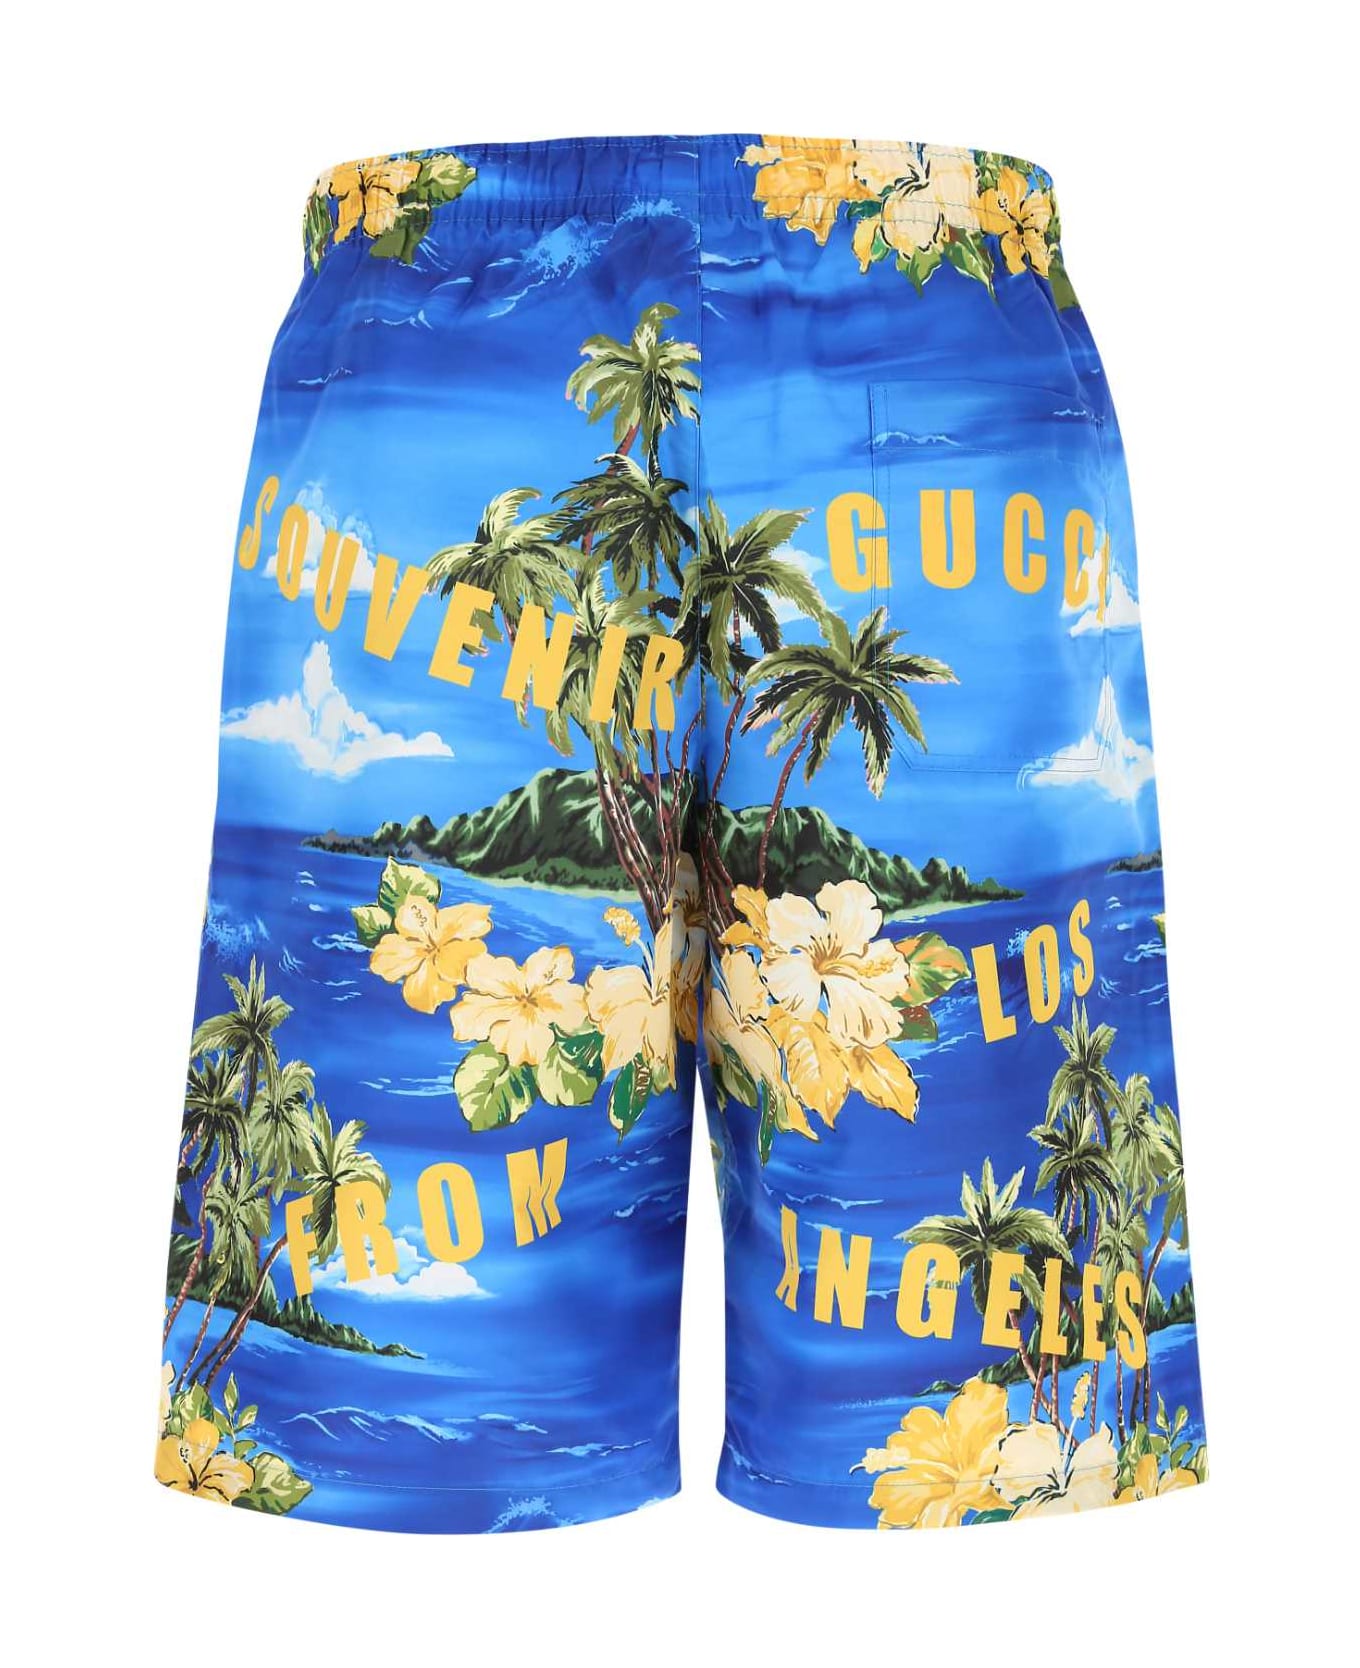 Gucci Printed Polyester Swimming Shorts - 4464